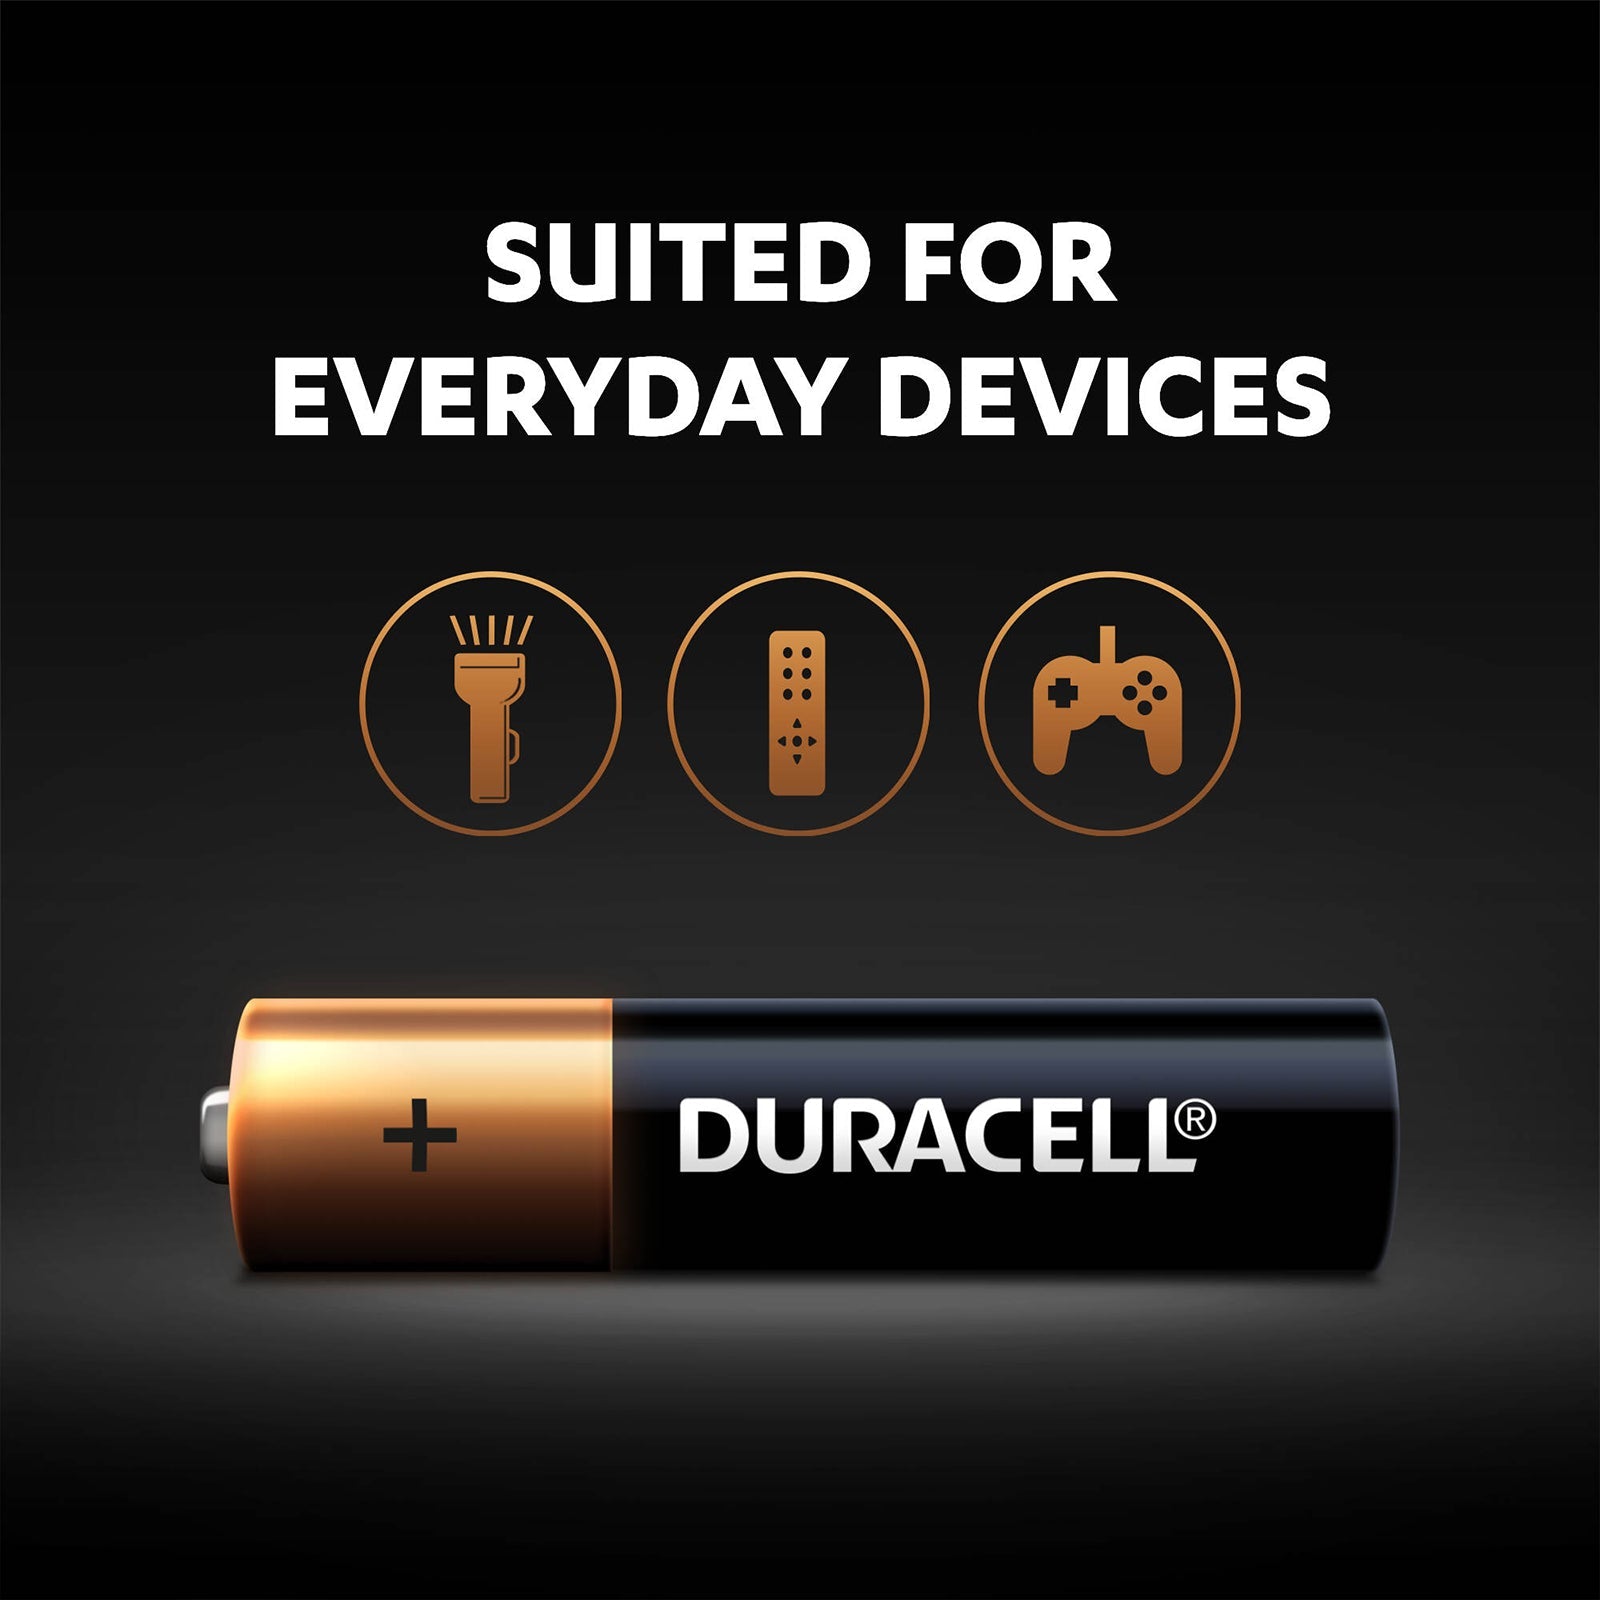 Duracell Alkaline AA Batteries, pack of 5